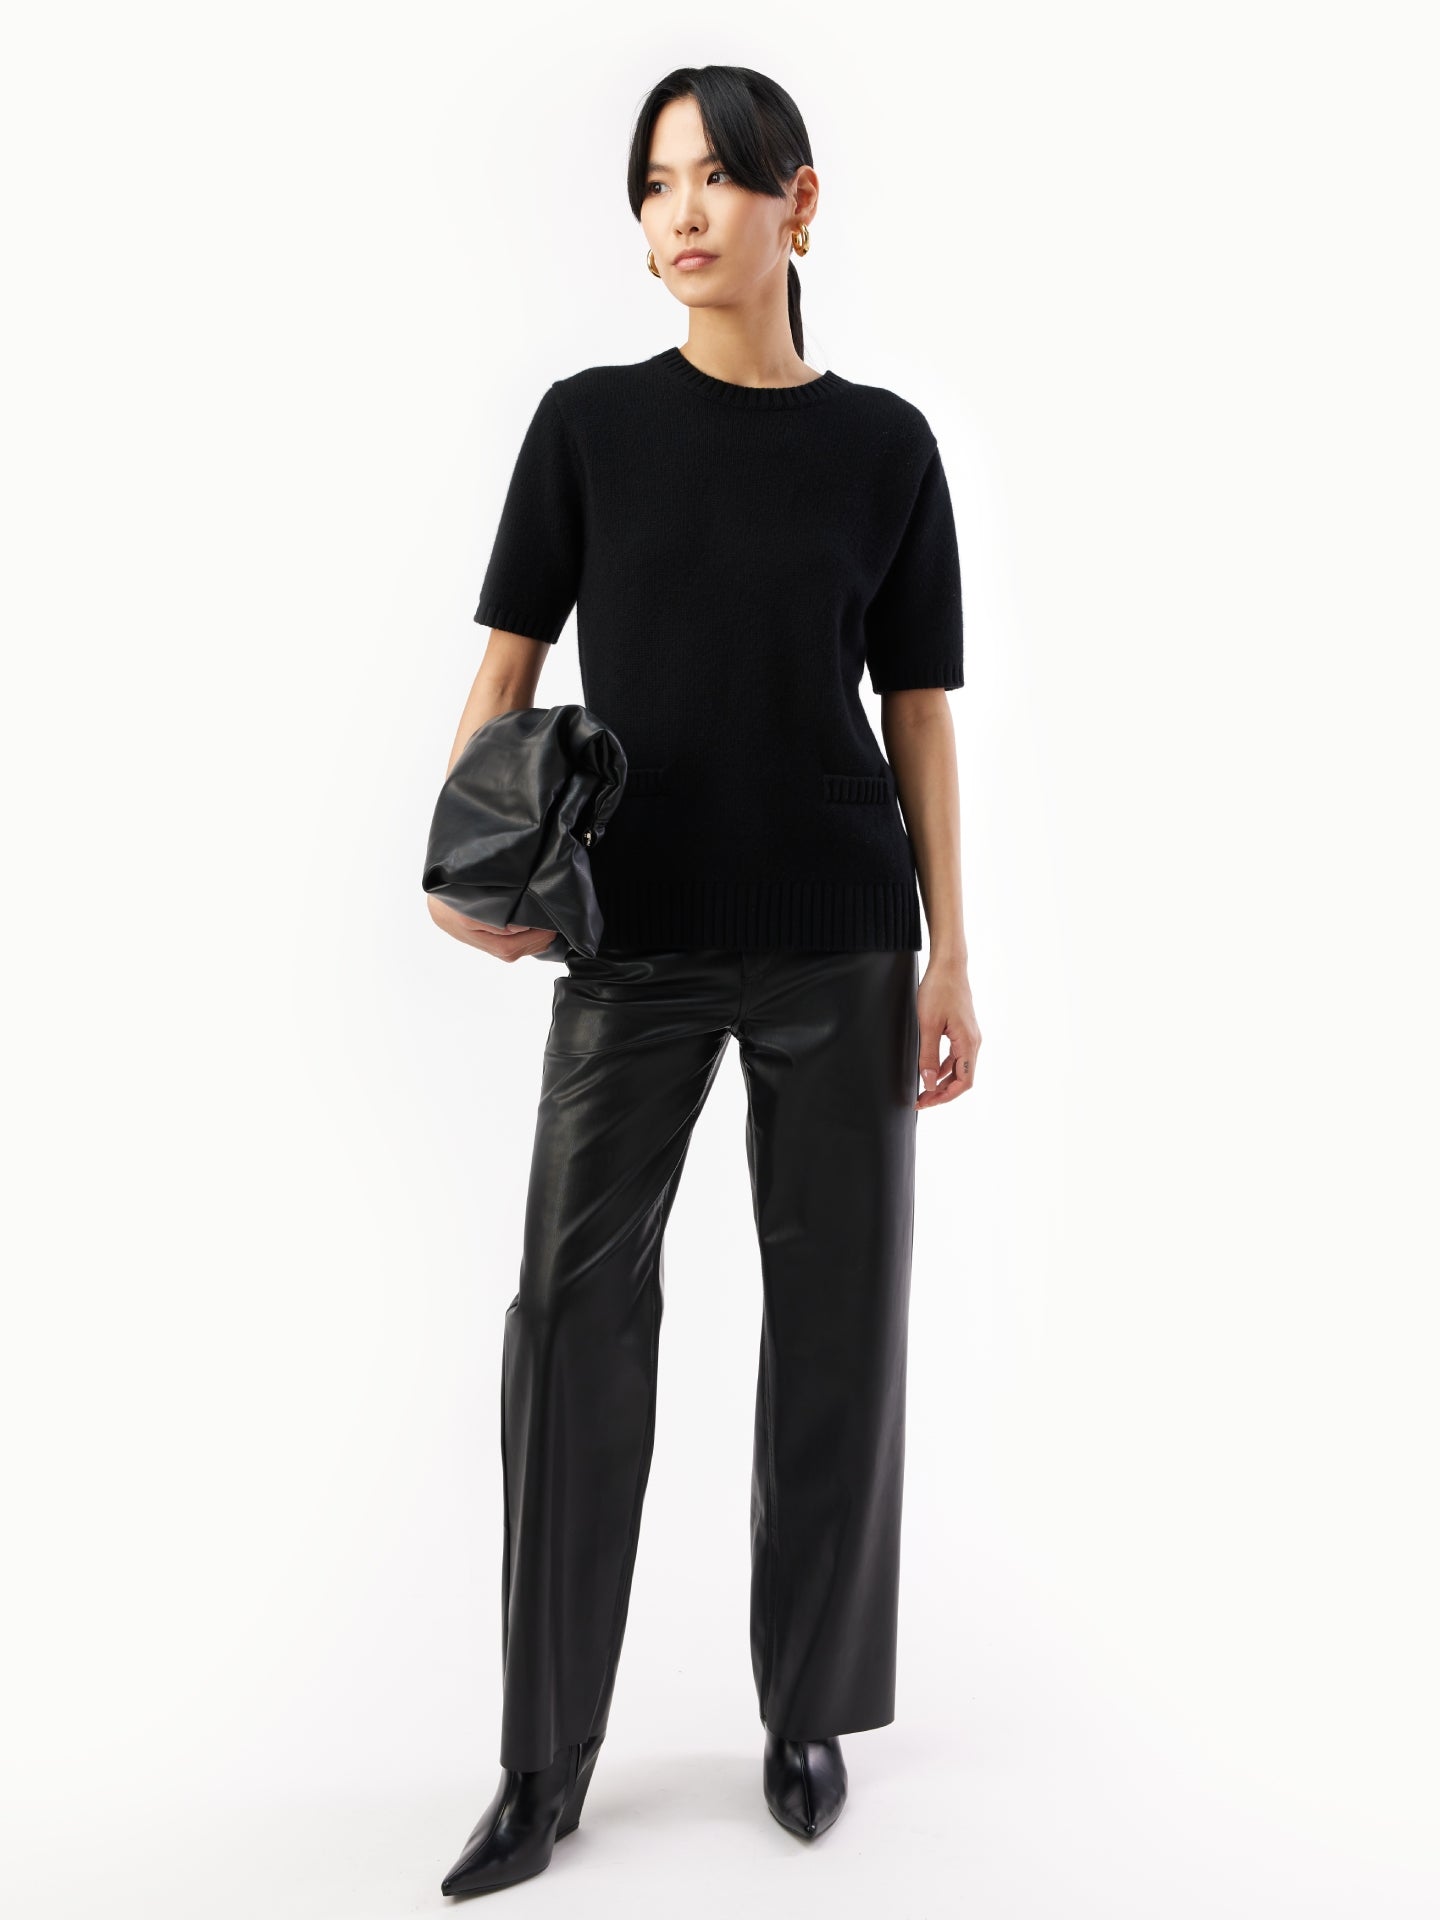 Women's Cashmere C-Neck T-Shirt Black - Gobi Cashmere